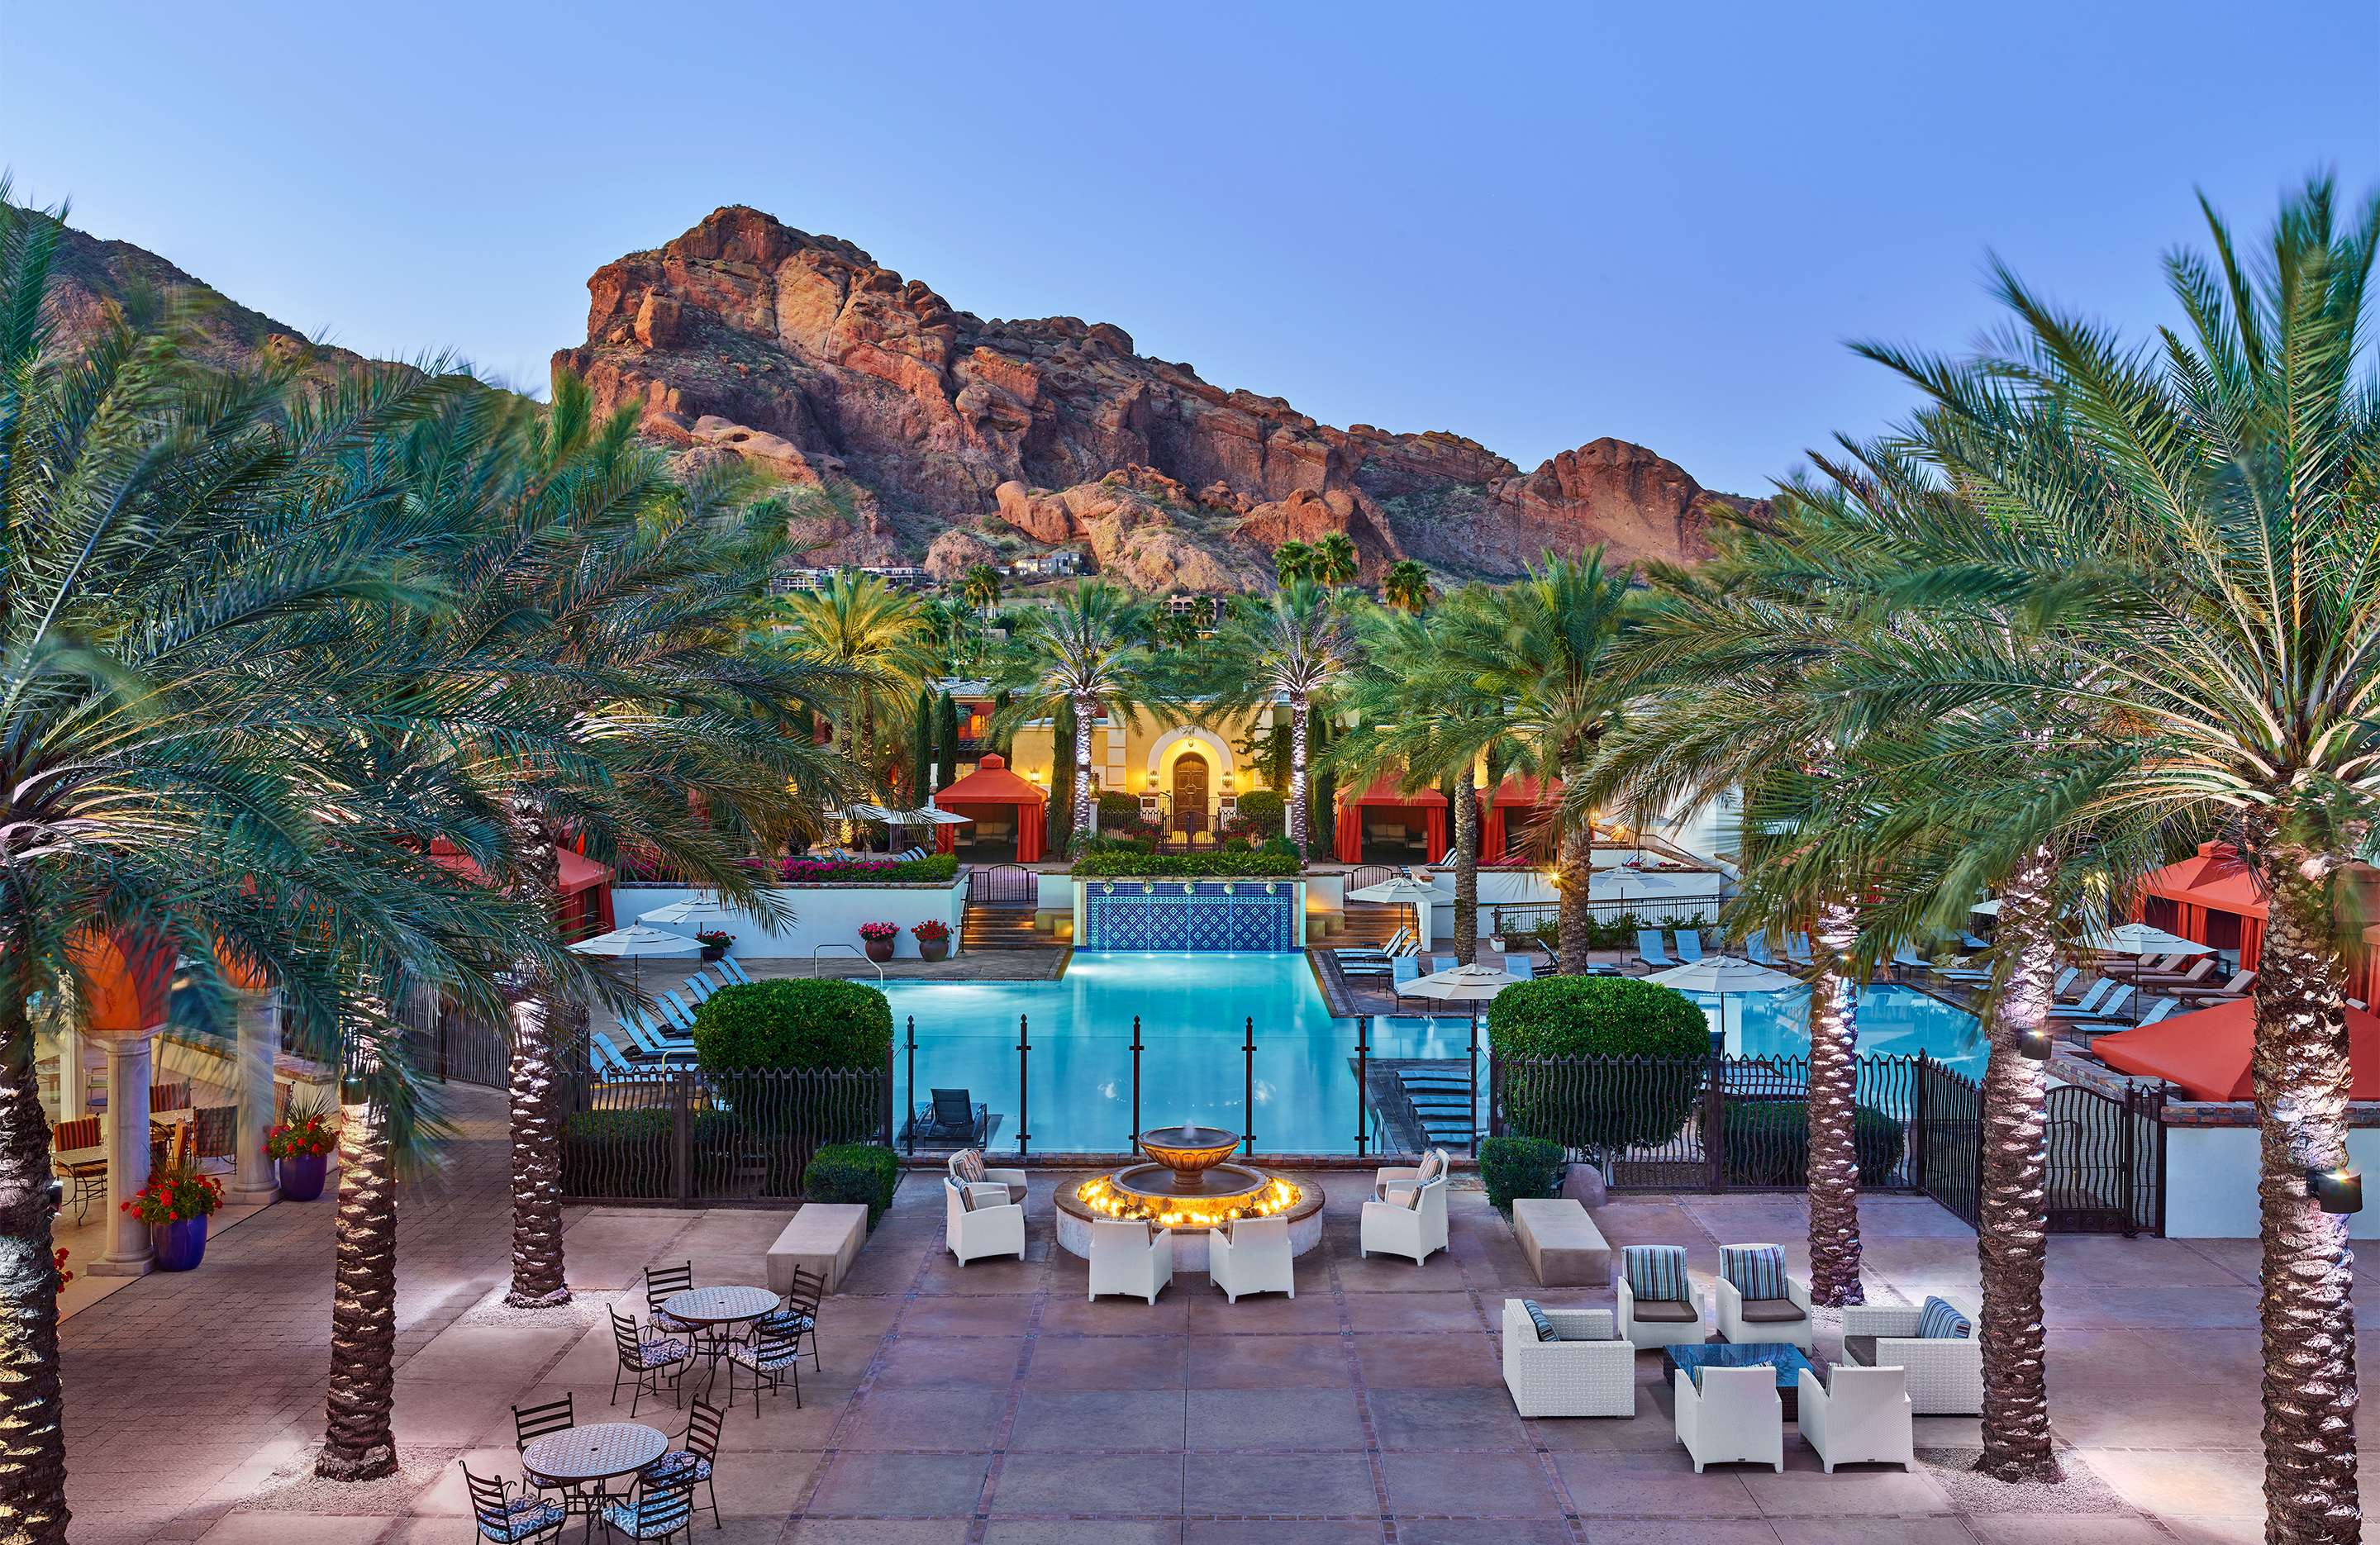 Omni Scottsdale Resort and Spa at Montelucia Resorts in Scottsdale, AZ pic picture picture